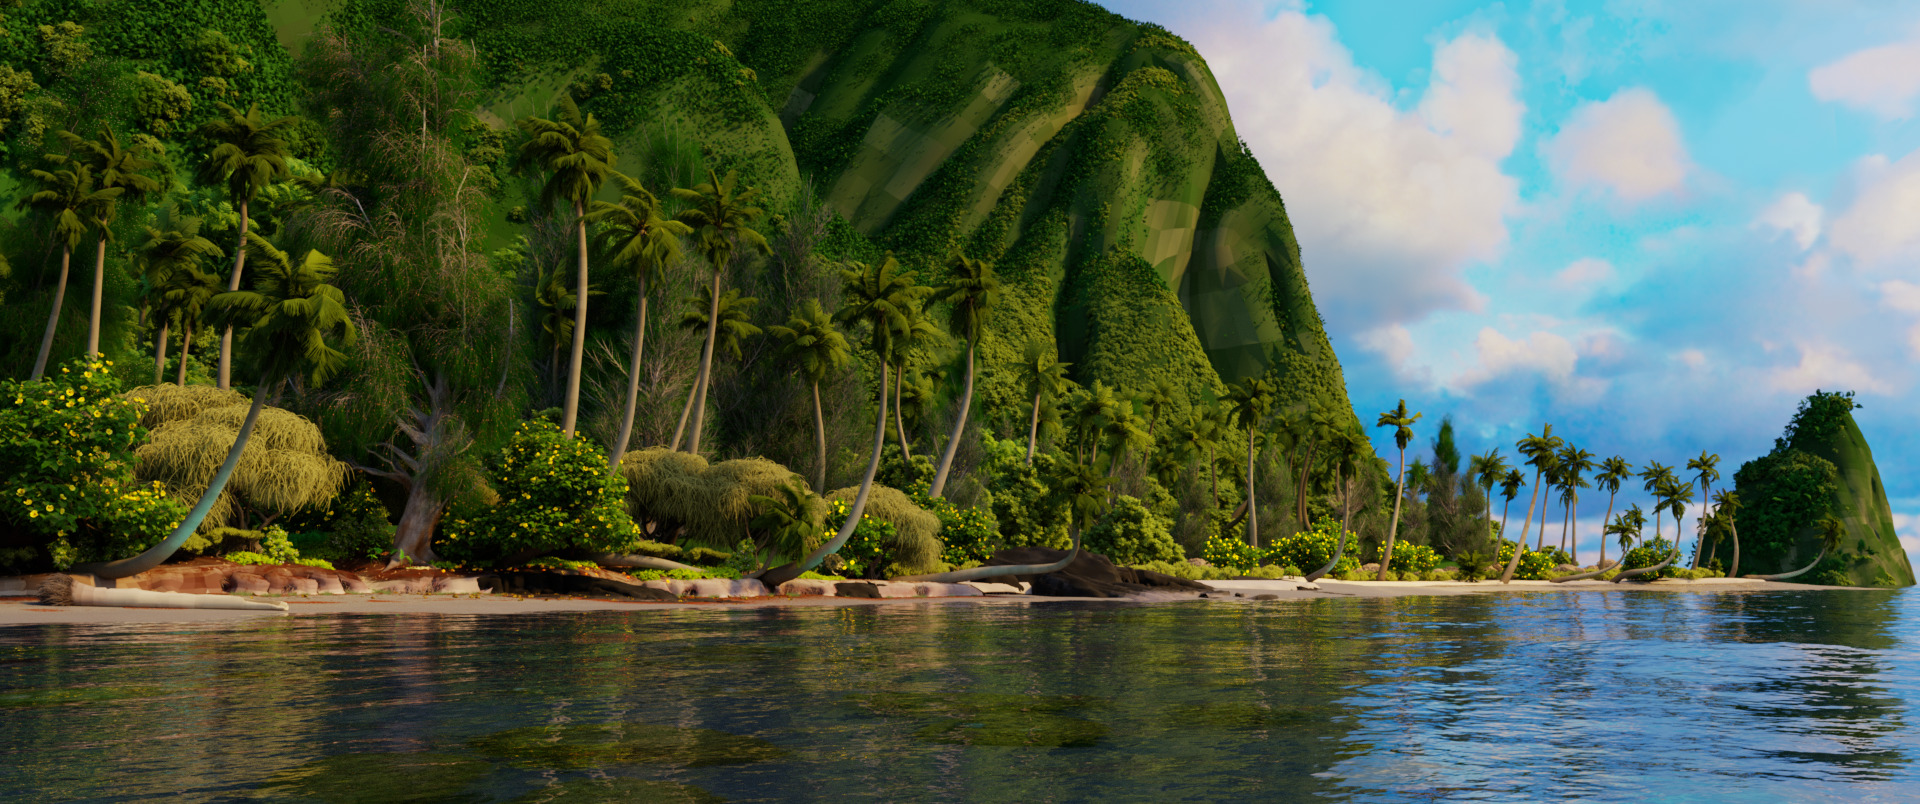 Moana Island main view rendered with pbrt-v4 using the GPU